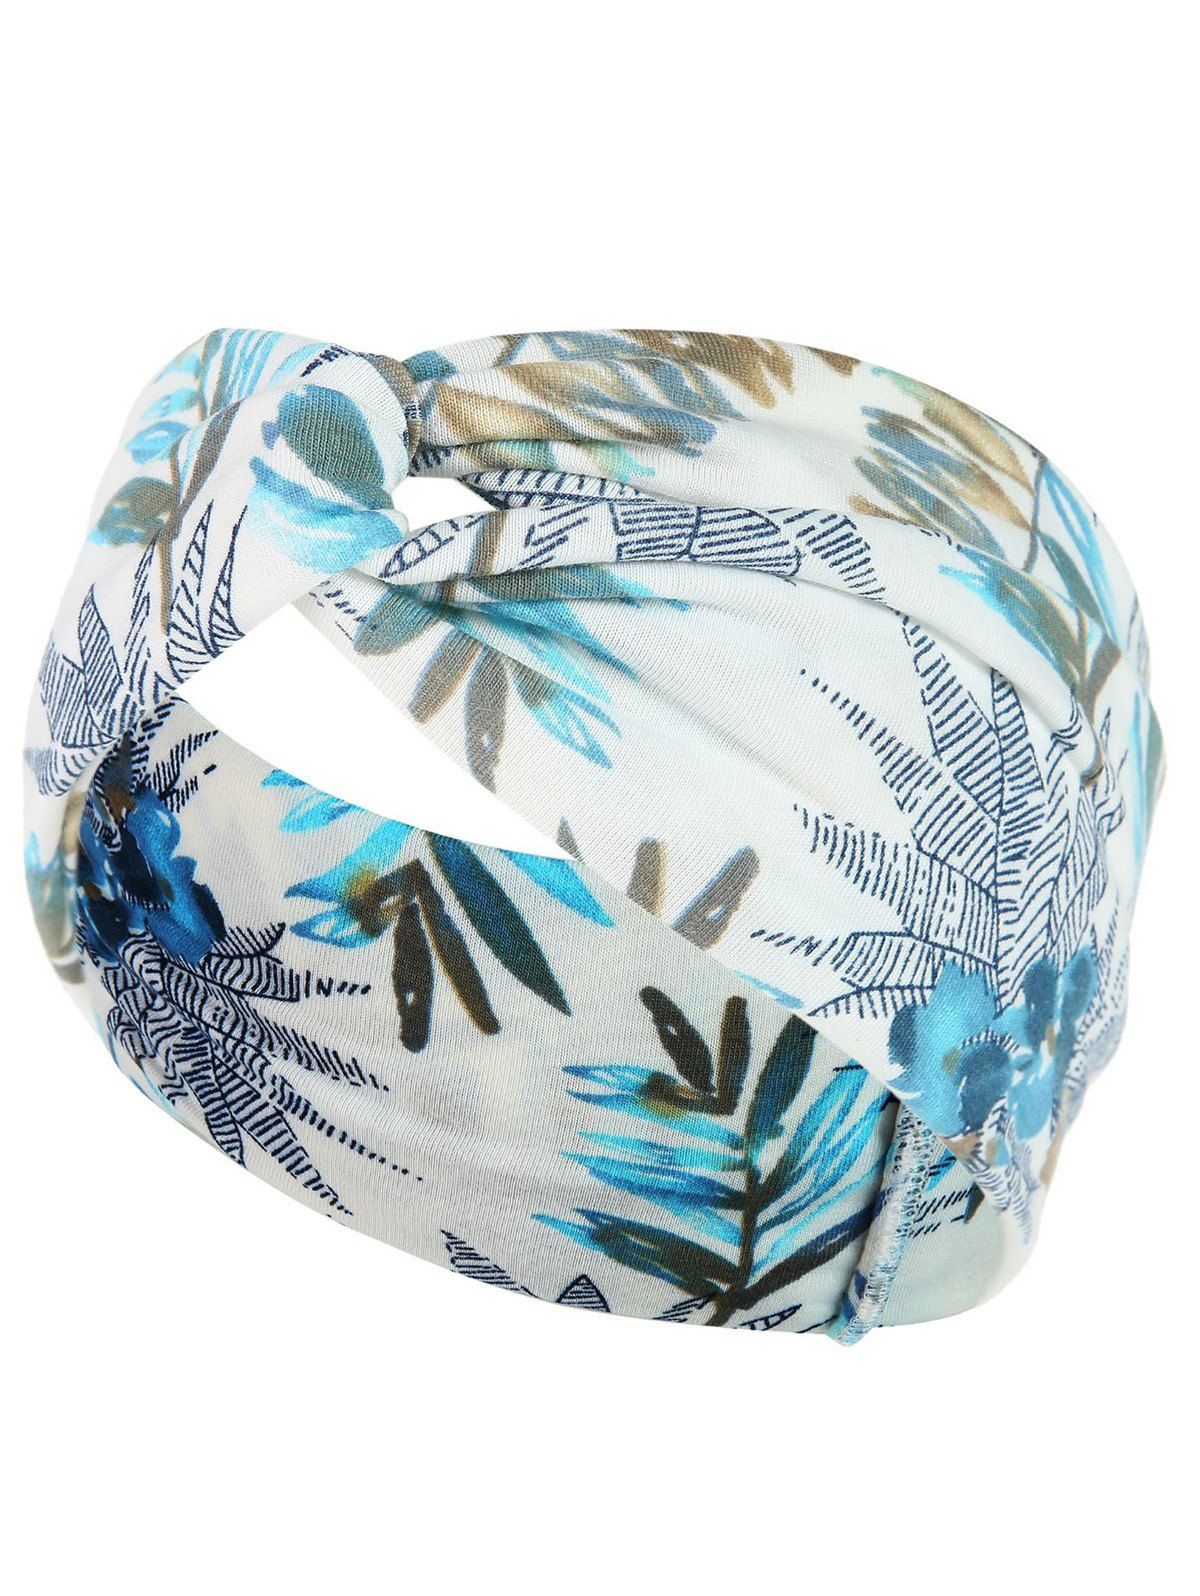 Bohemian Floral Print Headband Twisted Wide Stretchy Yoga Sporty Sweat Wicking Hairband - LIGHT BLUE 